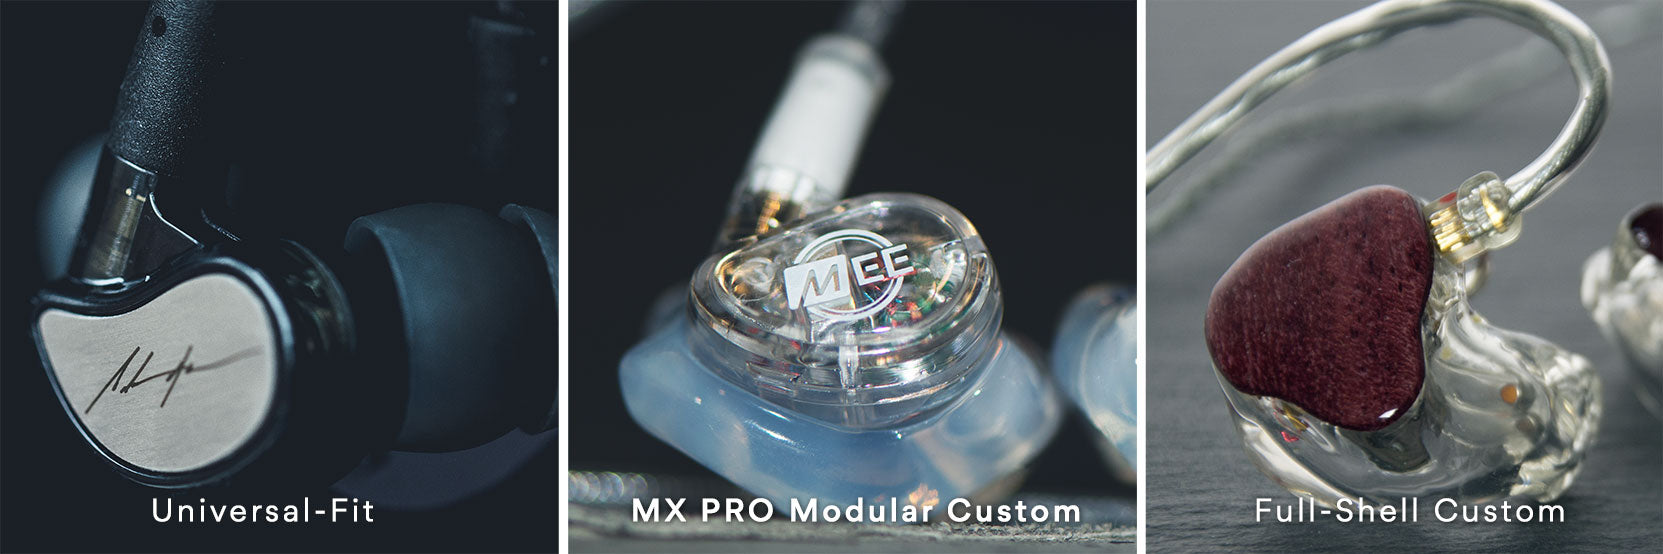 Comparison of universal-fit in ear monitors vs MX PRO modular in-ear monitors vs custom in ear monitors